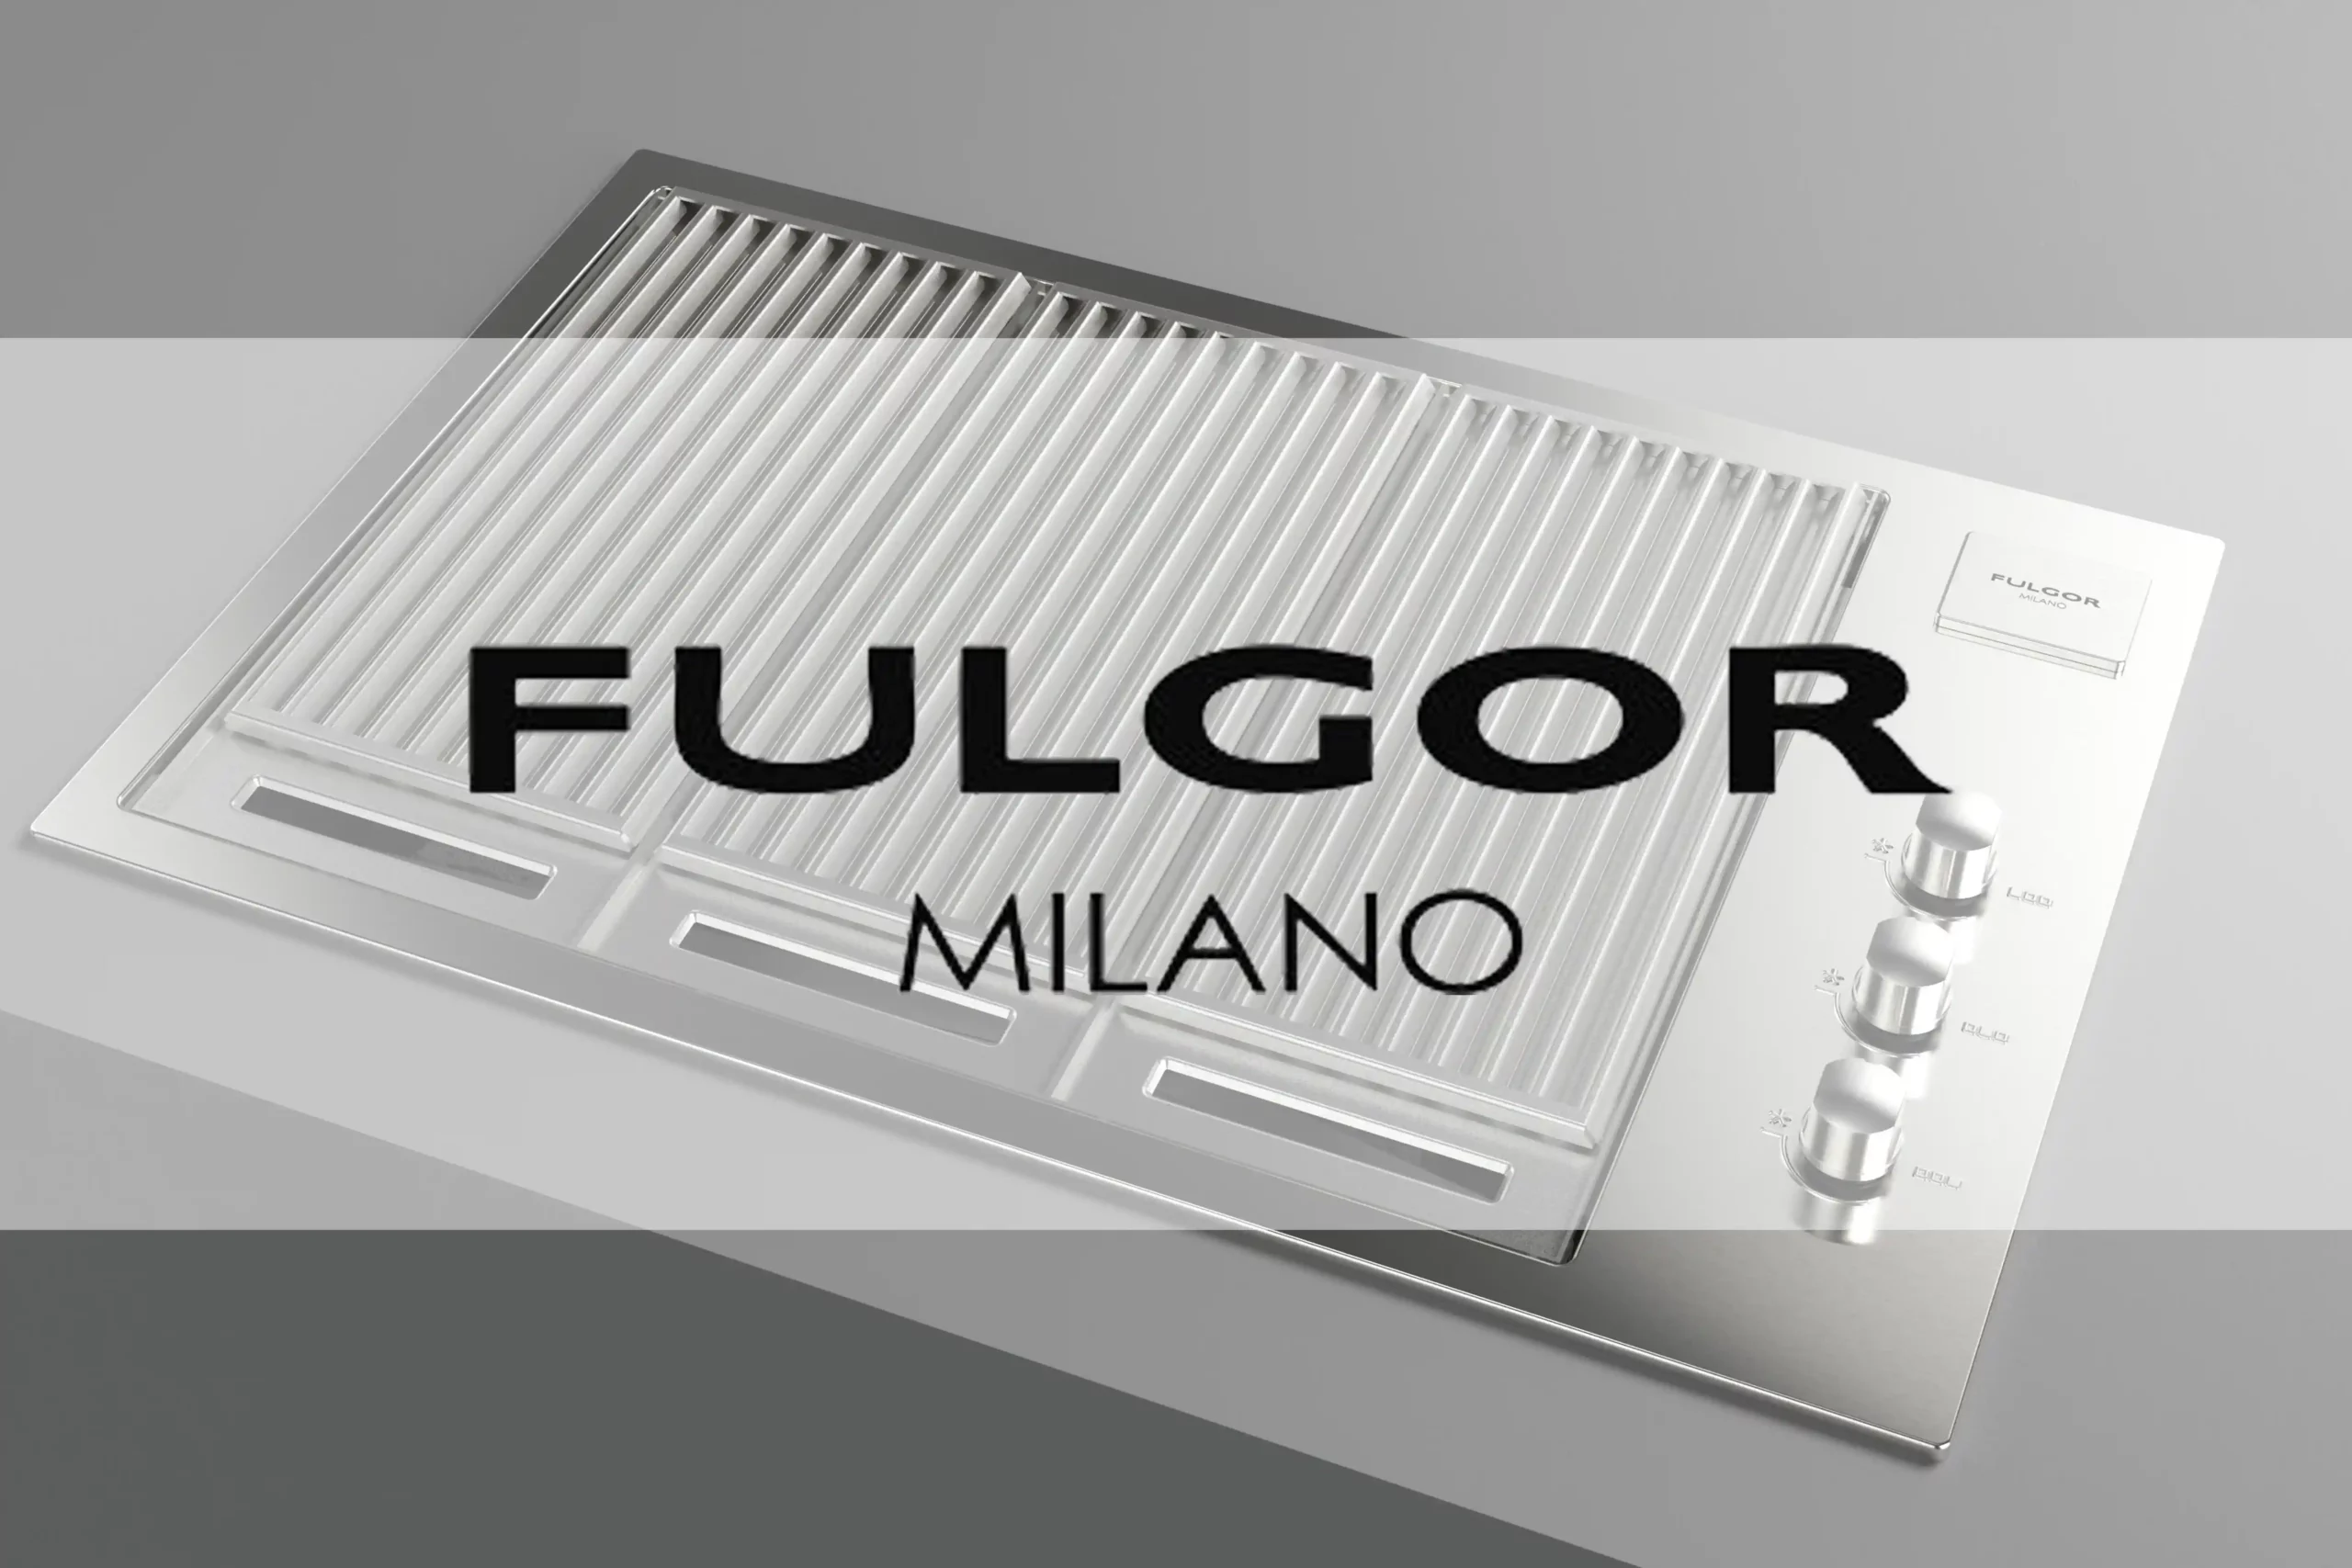 Fulgor Milano Einbaugeräte Luxus aus Italien Steelraum Lifestyle Michael Hofmann Hallstadt Bamberg BBQ Fachhändler